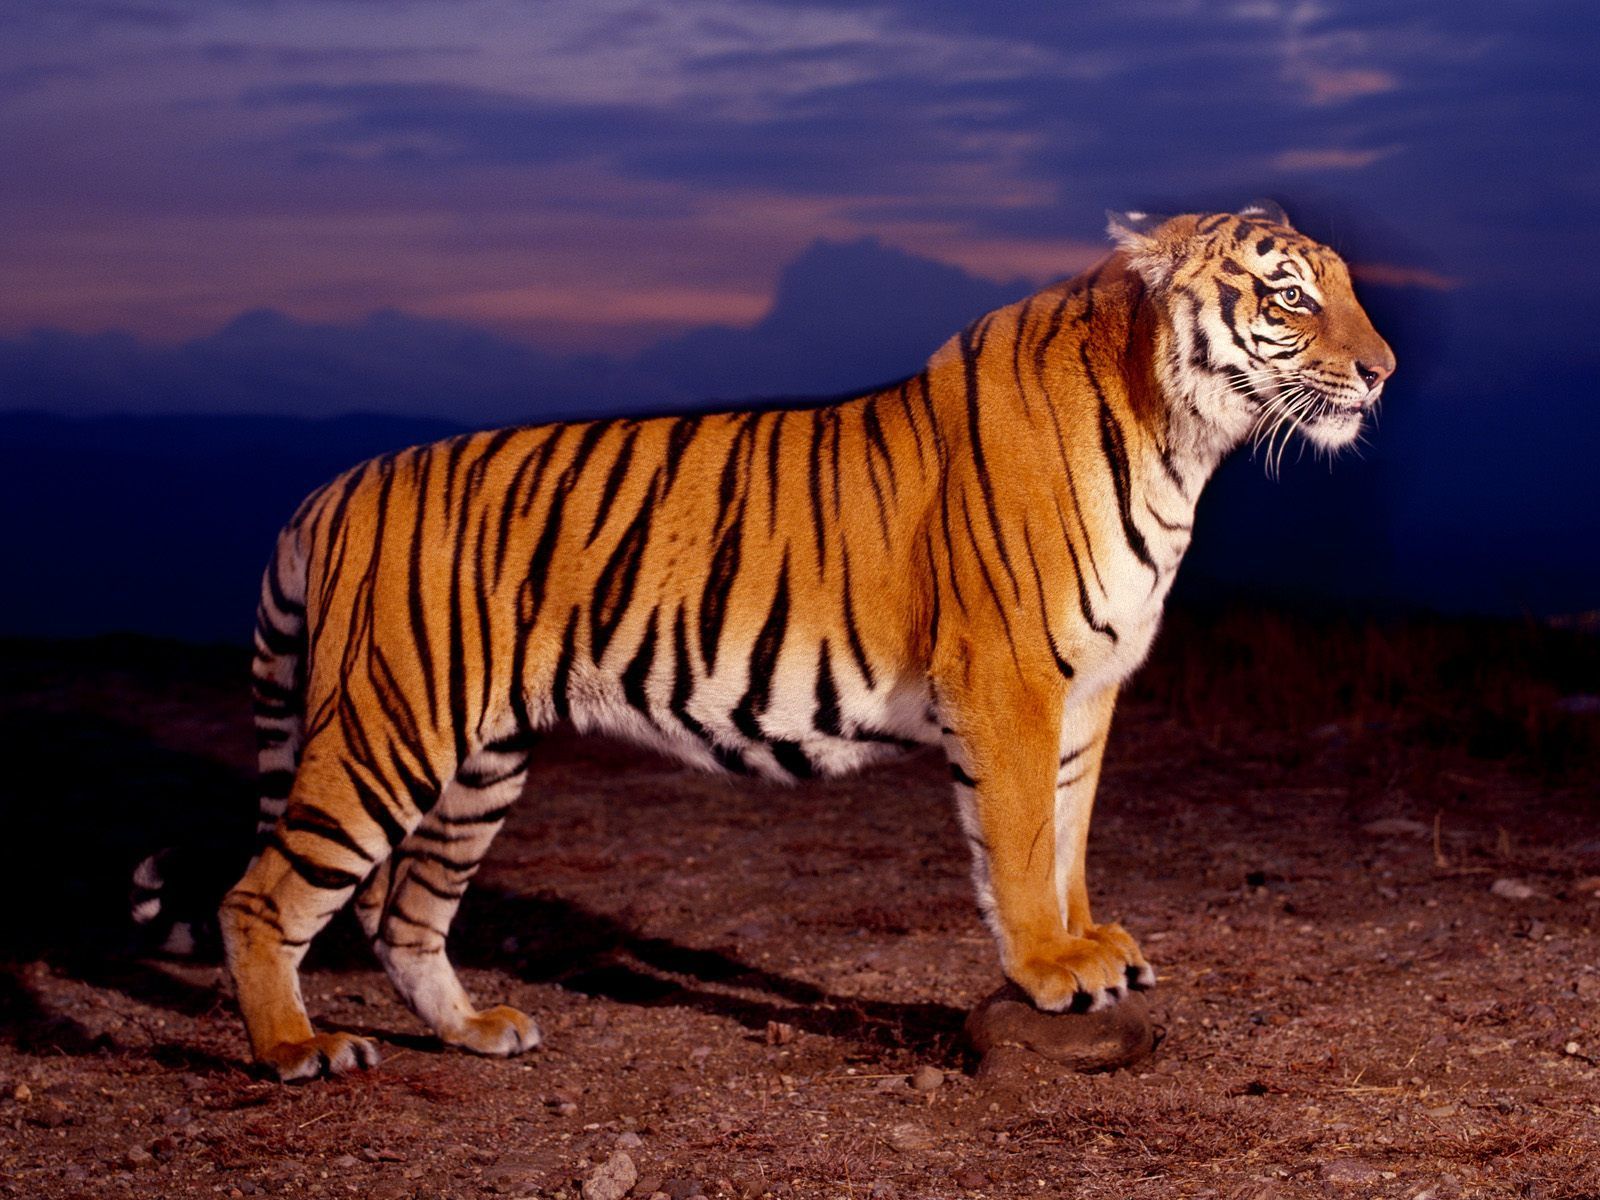 Animated Tiger Image. Tiger picture, Tiger image, Tiger wallpaper